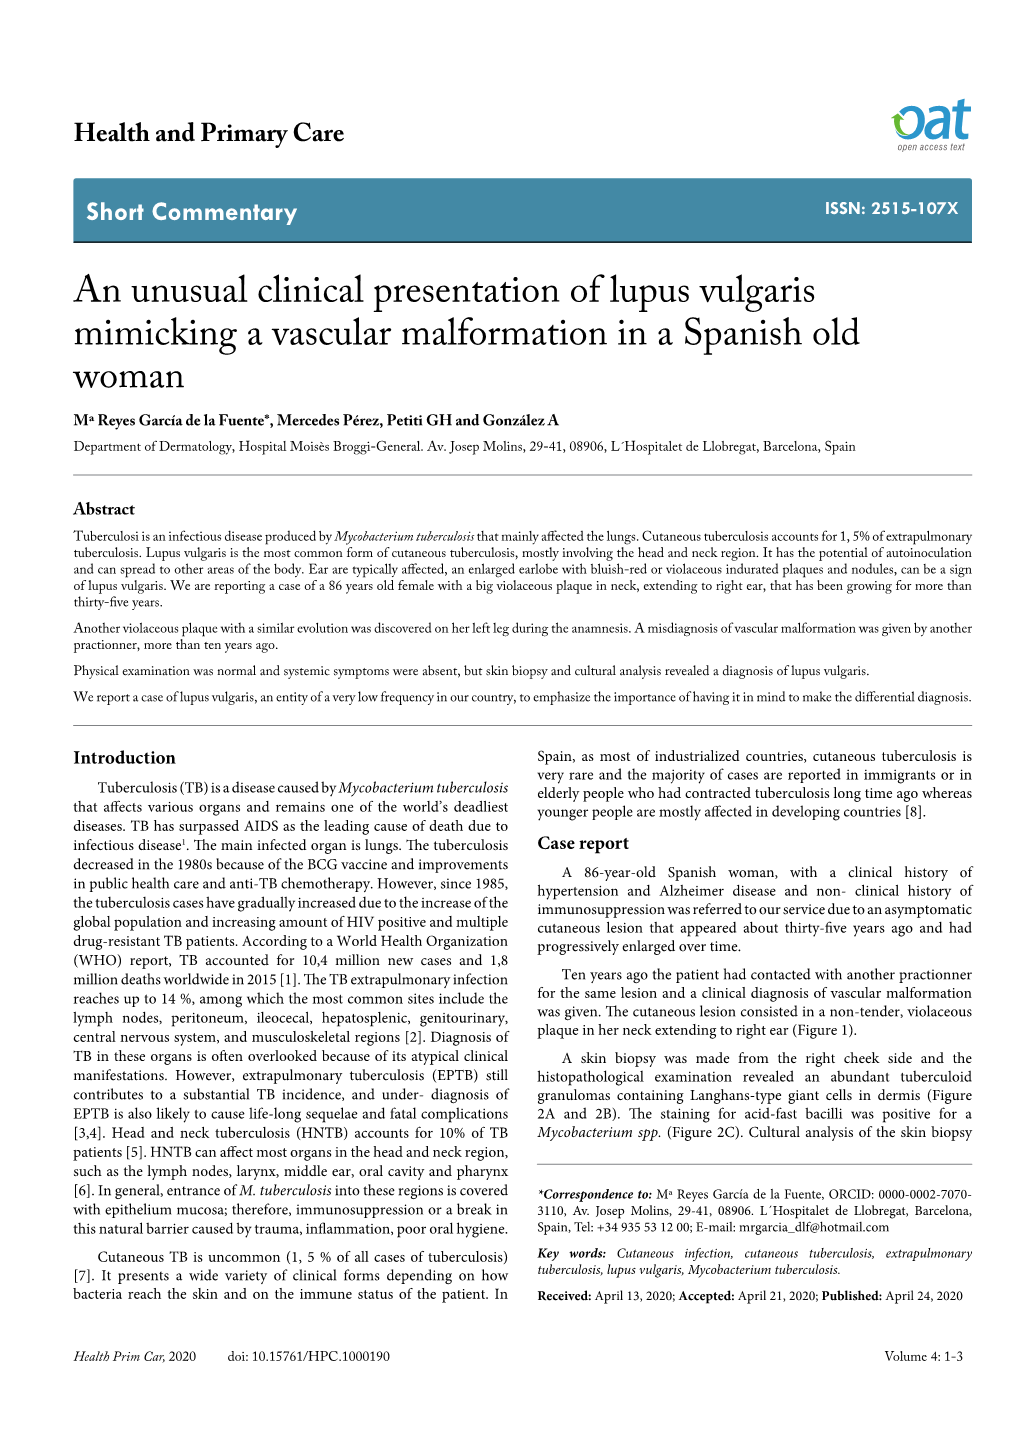 An Unusual Clinical Presentation of Lupus Vulgaris Mimicking a Vascular